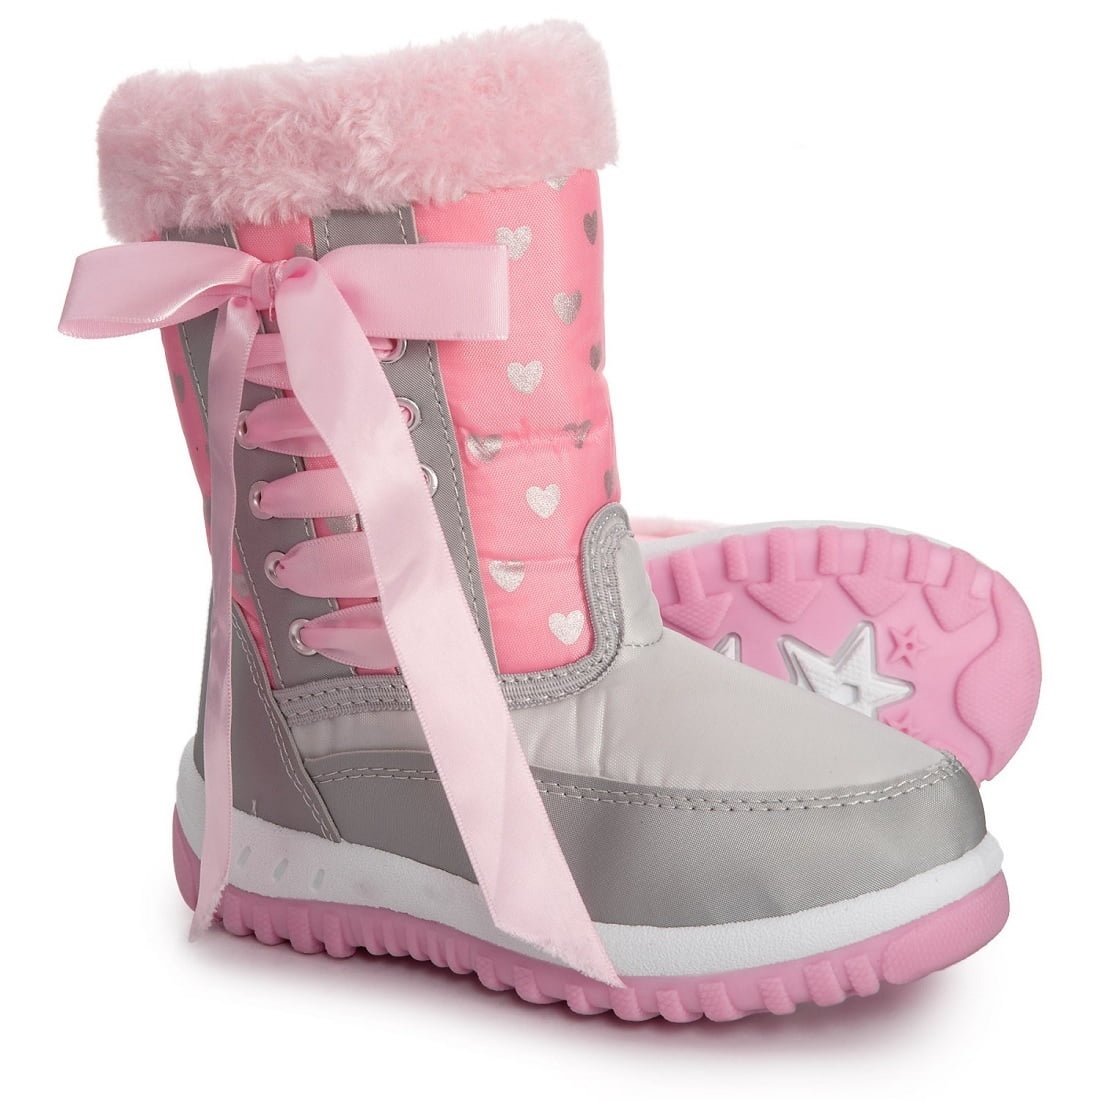 walmart winter boots for kids